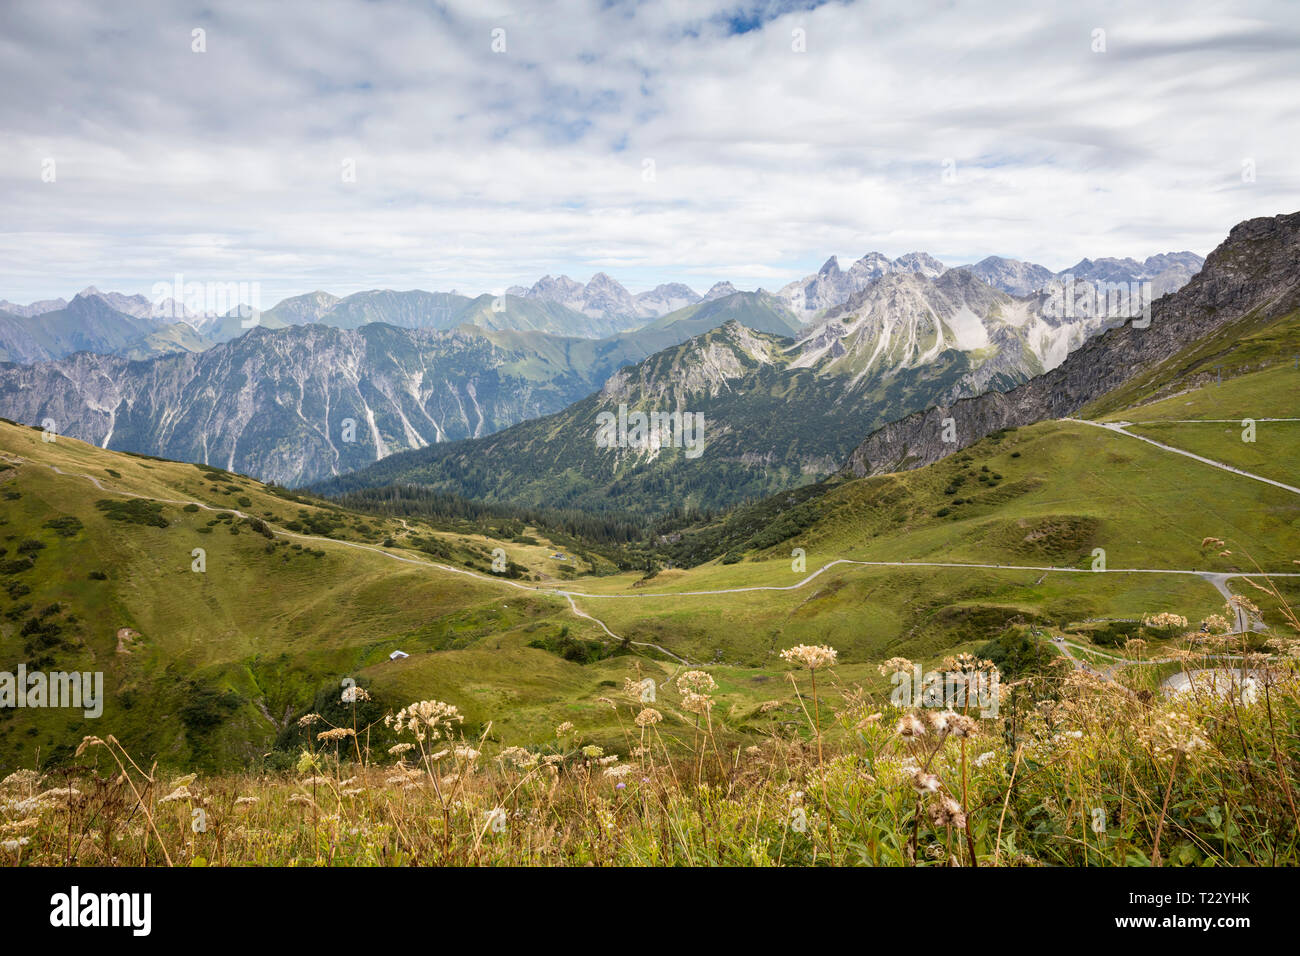 In Germania, in Baviera, Allgaeu, Allgaeu Alpi, vista dalla stazione a monte Kanzelwand Foto Stock